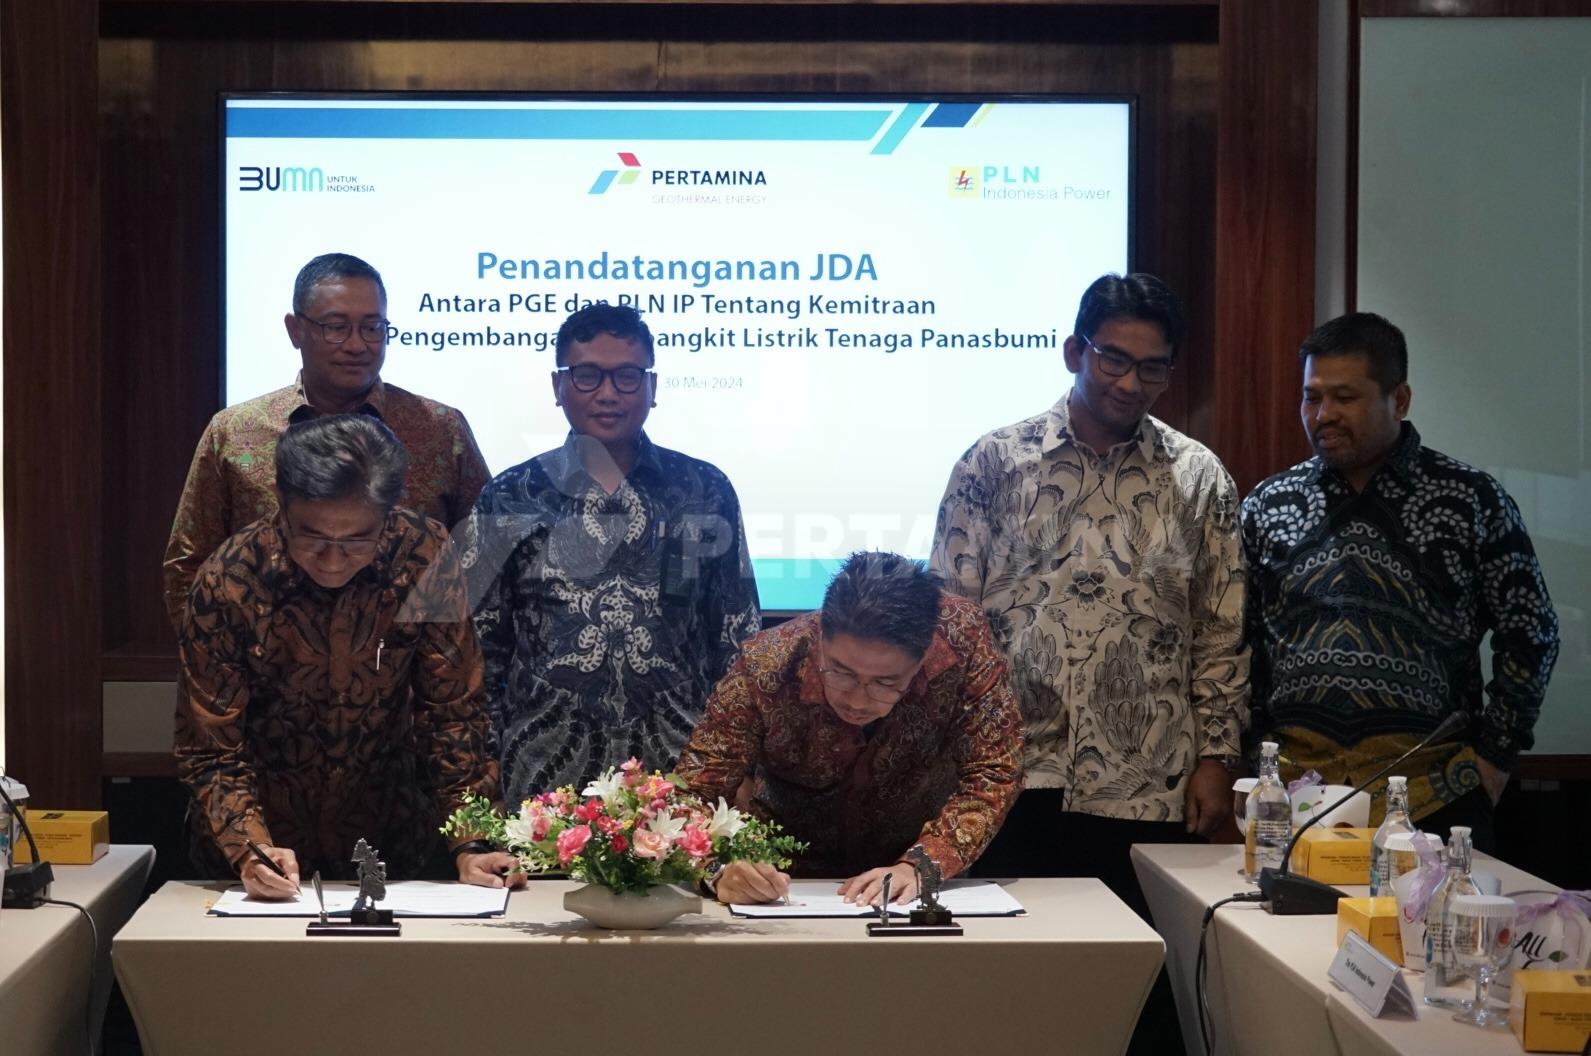 PGE dan PLN menandatangani perjanjian untuk mengoordinasikan upaya pengembangan tenaga panas bumi di Indonesia